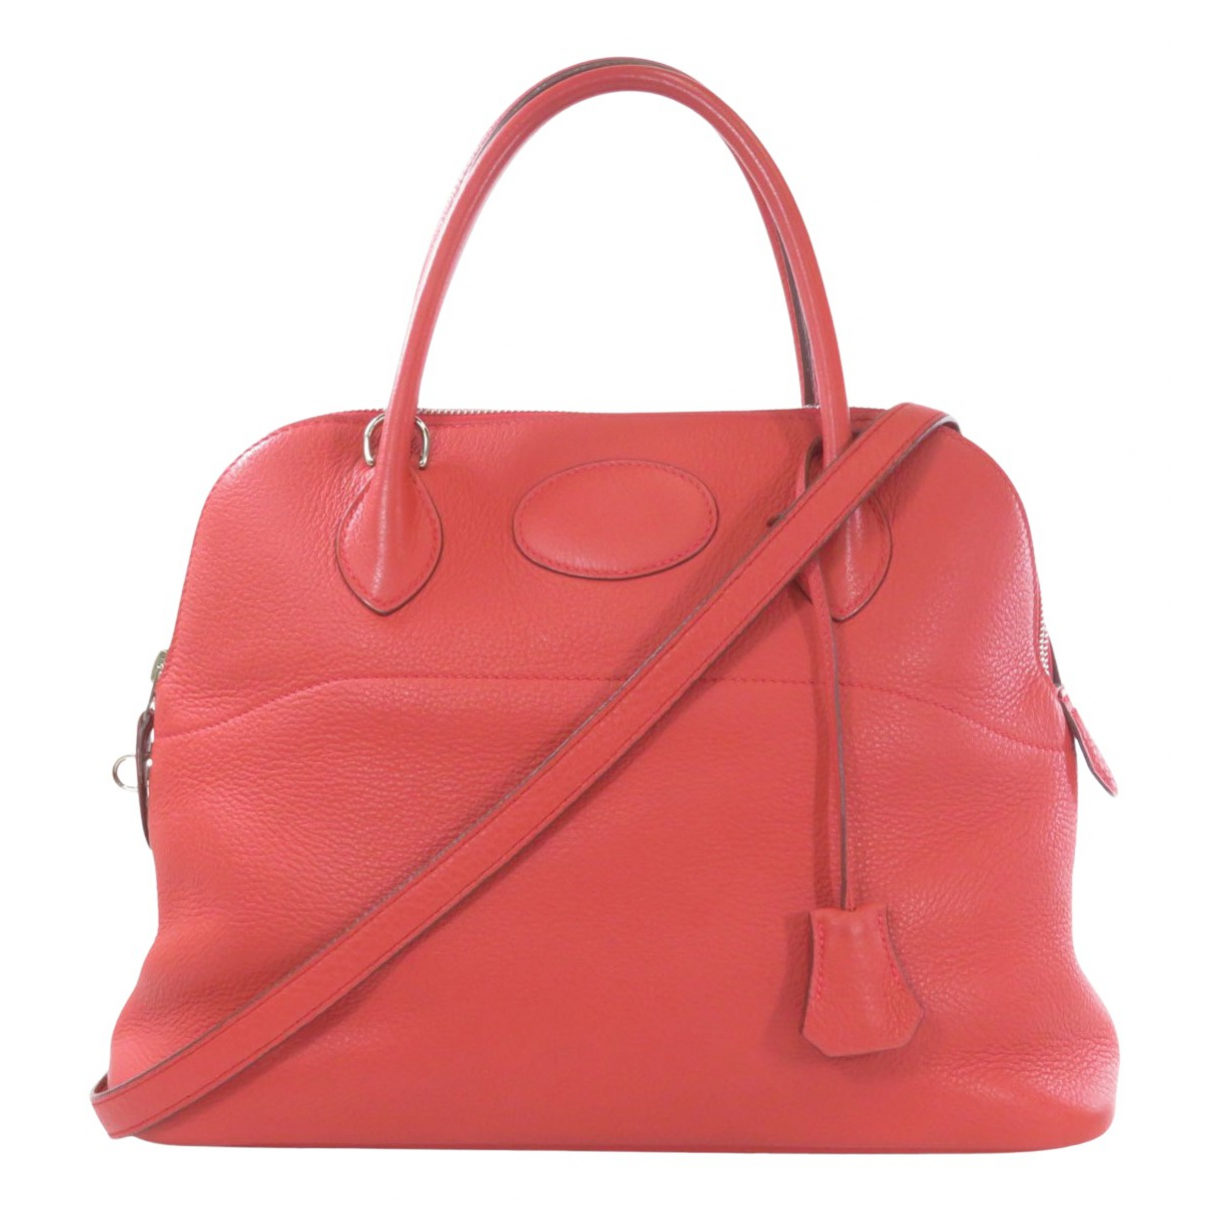 Bolide Dallas Mall leather Finally resale start handbag